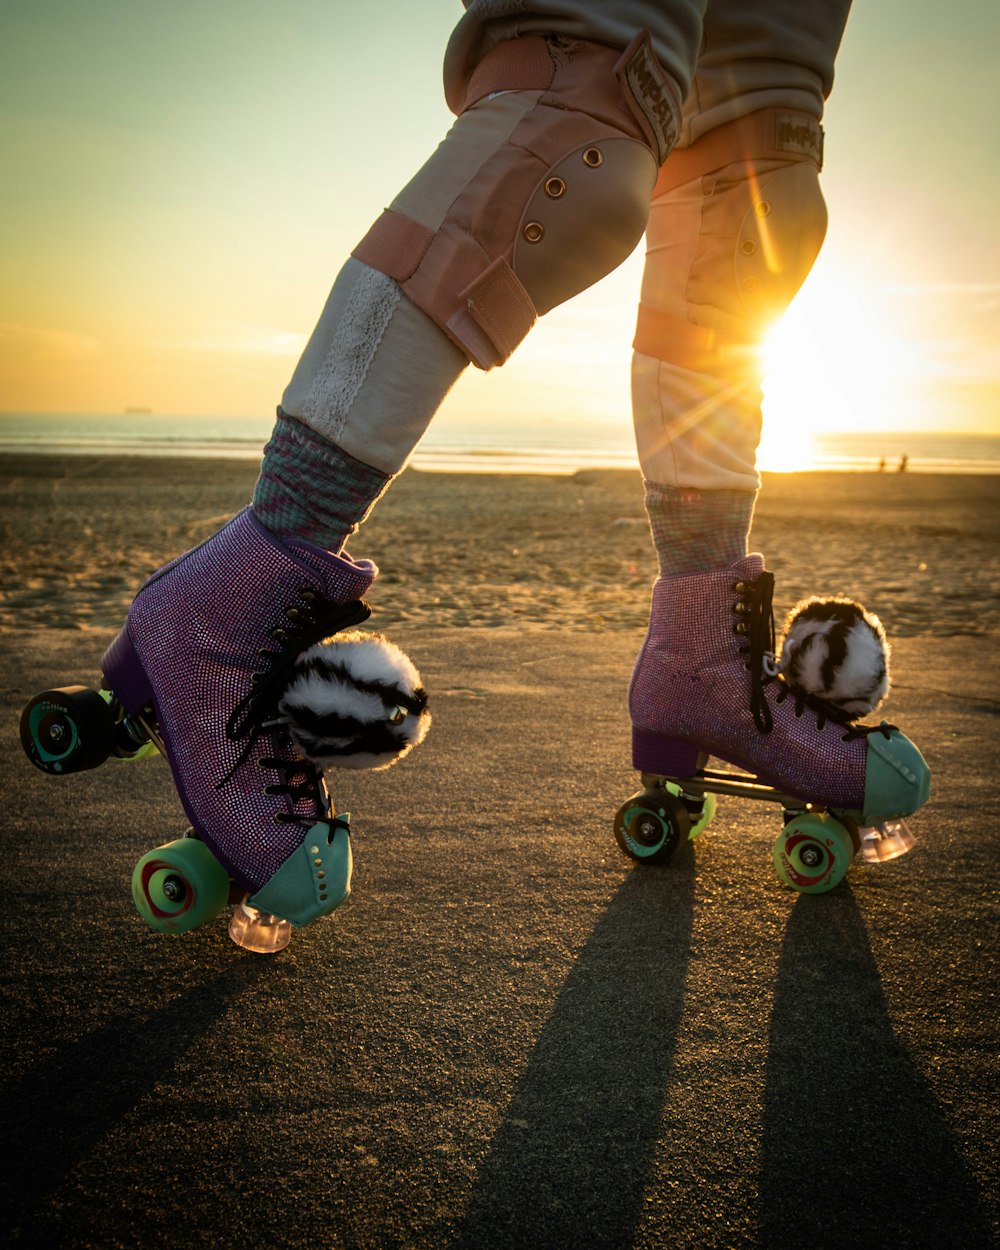 a person riding a skateboard on a beach